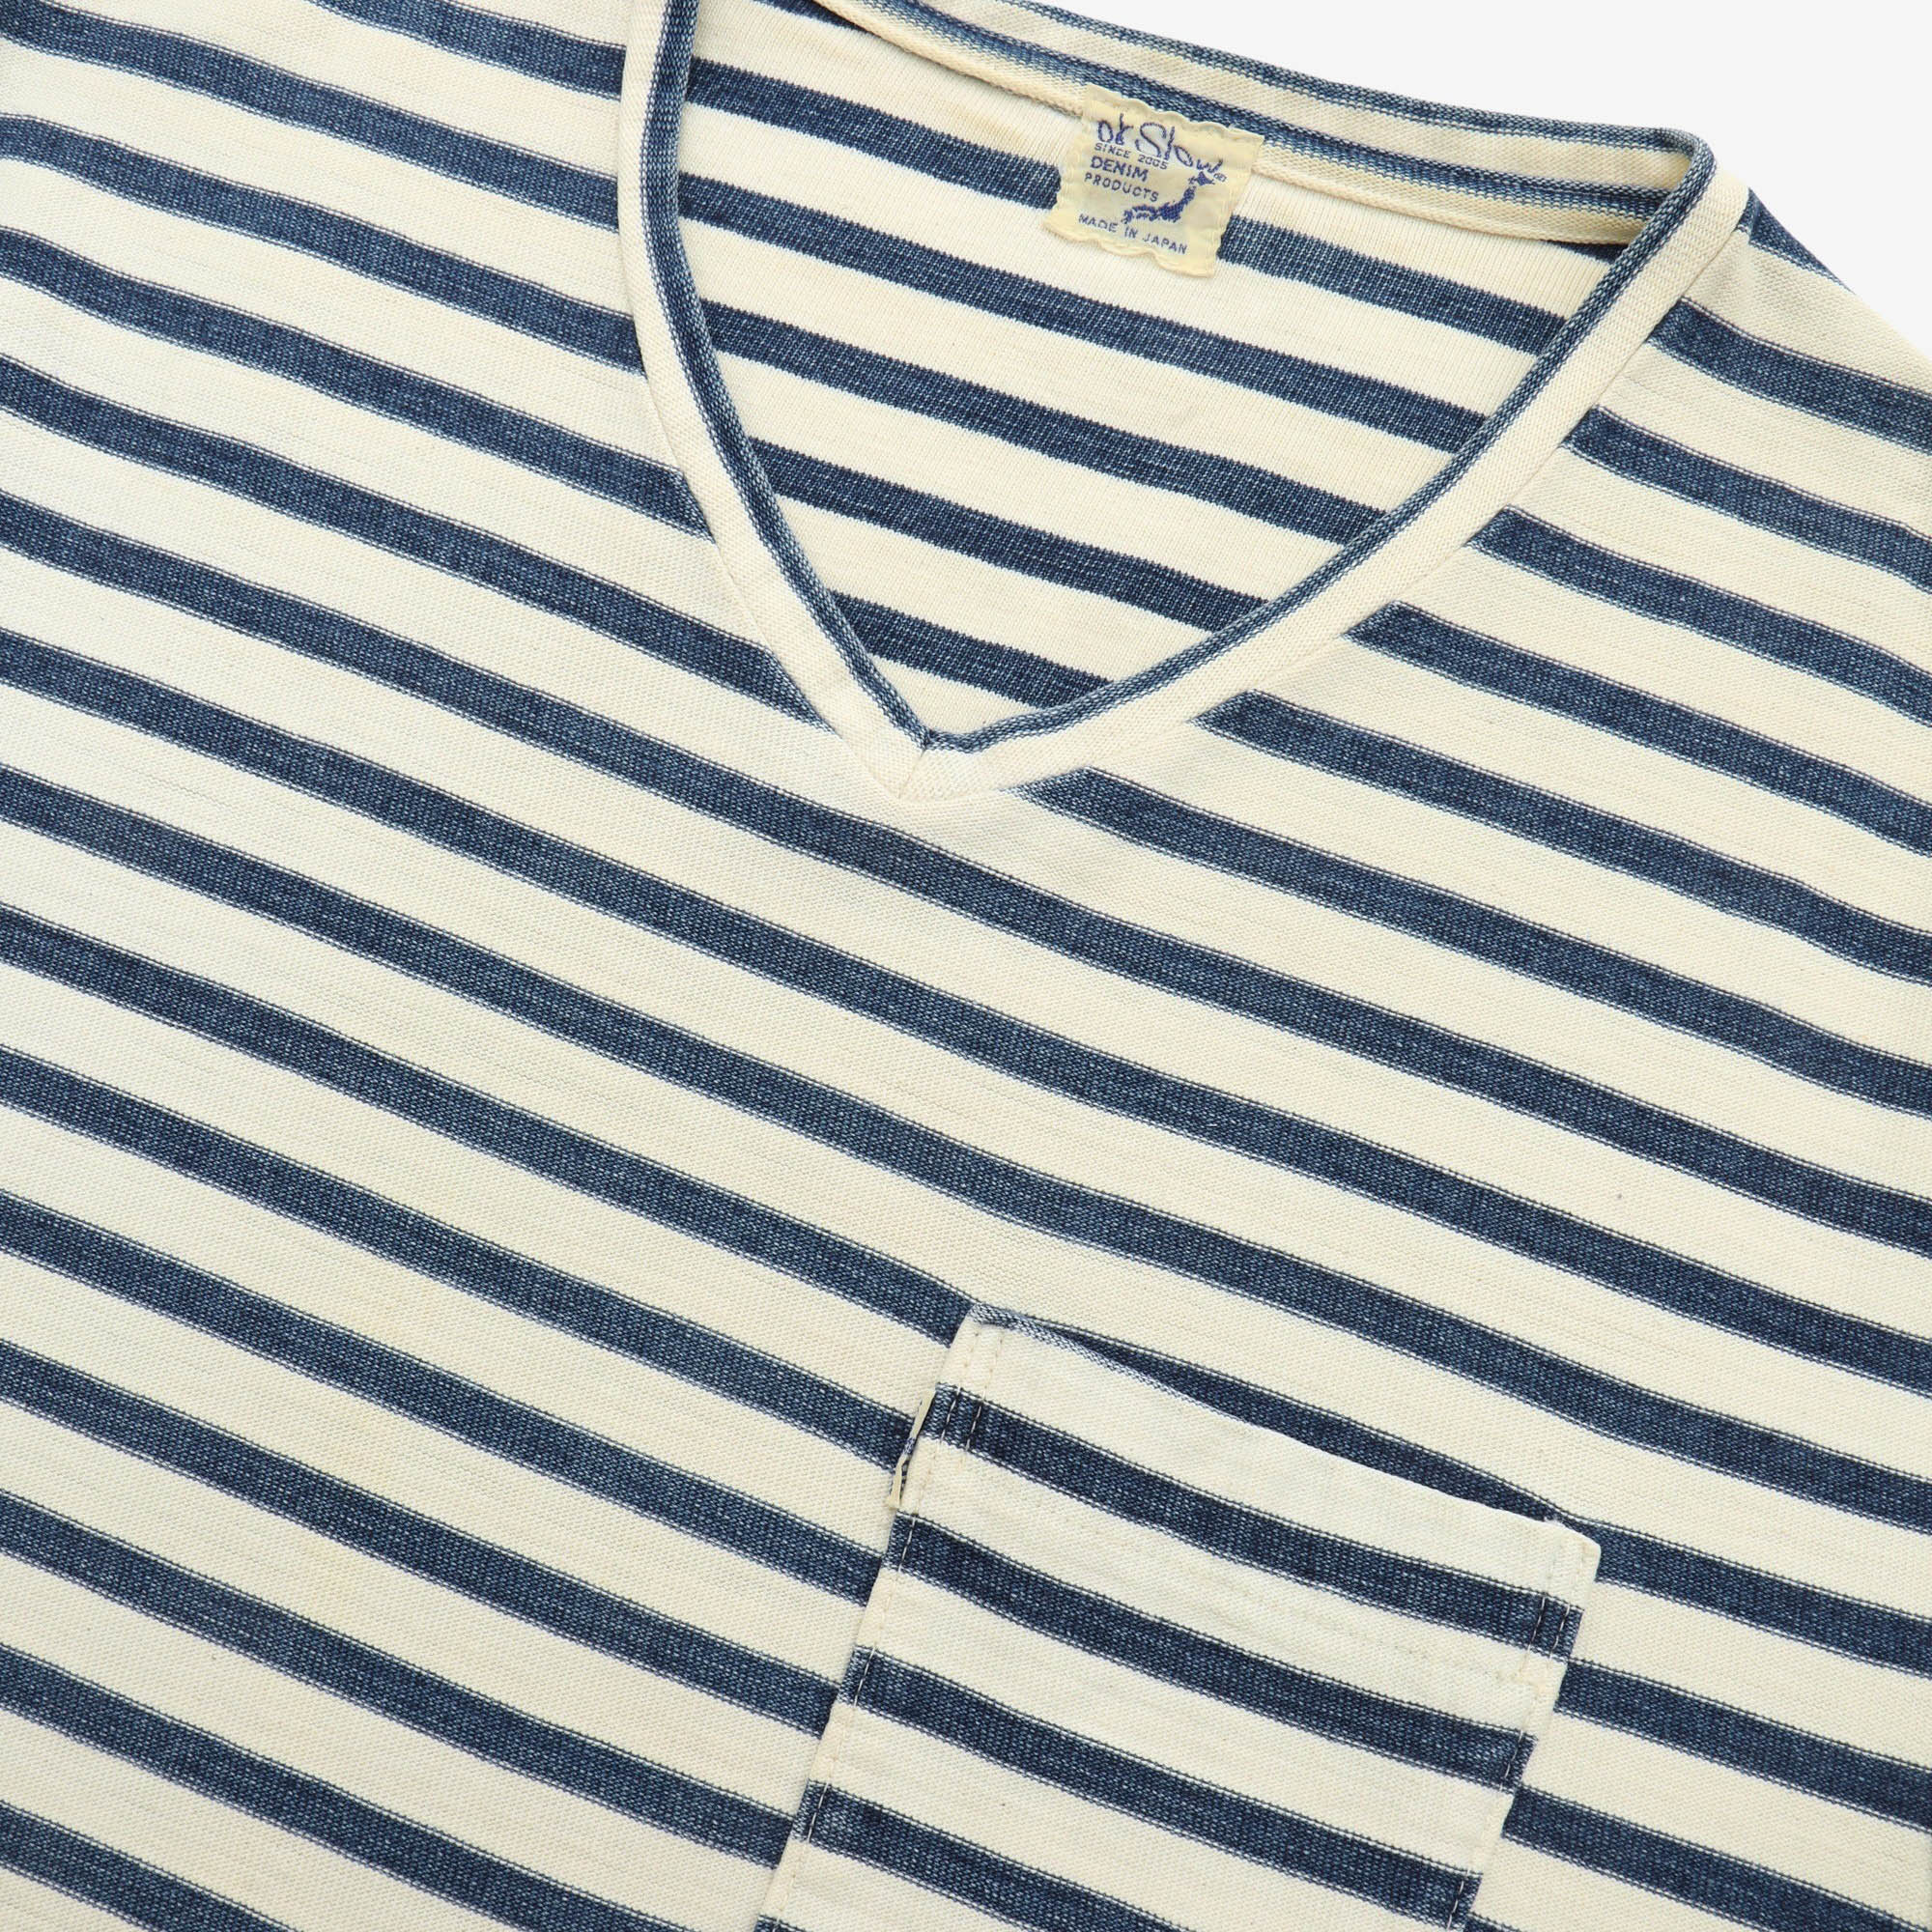 Striped V-Neck T-Shirt